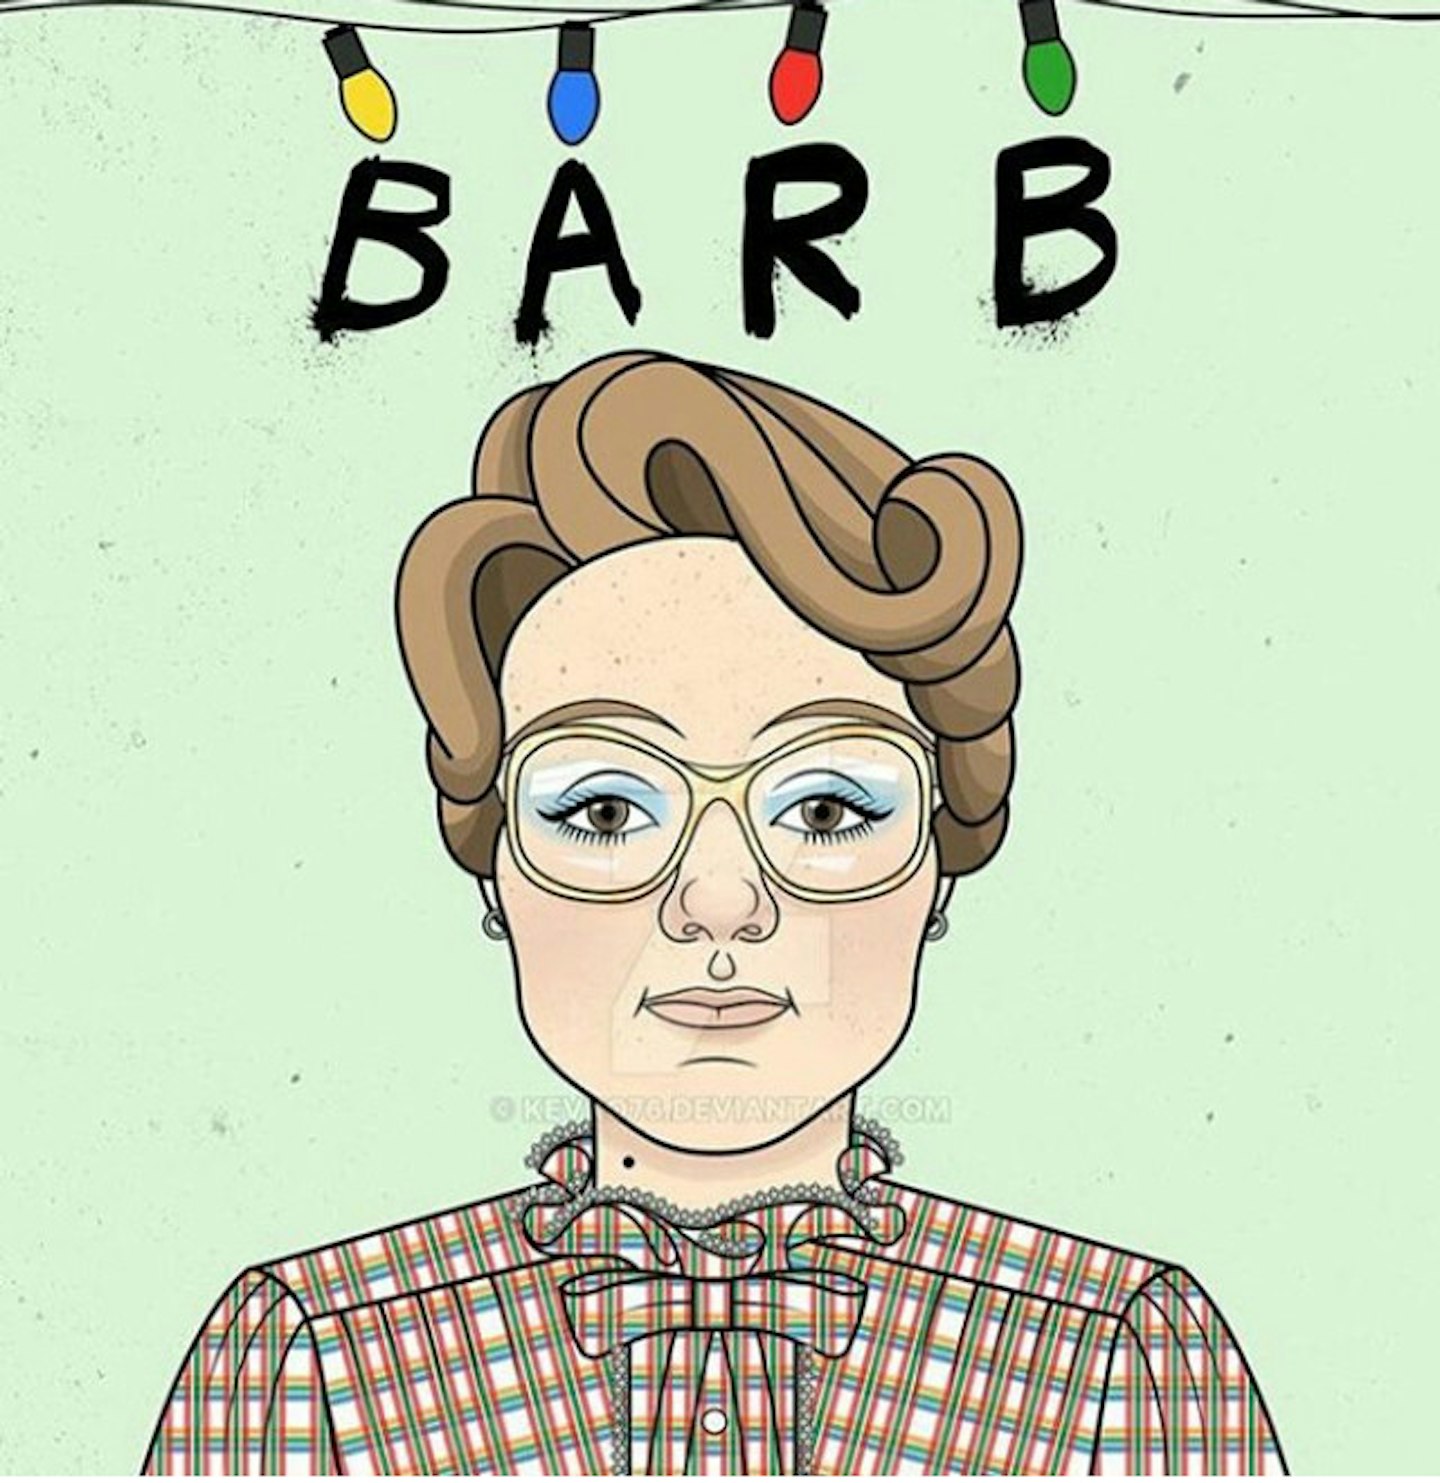 Stranger Things “Barb” - GIFs - Imgur